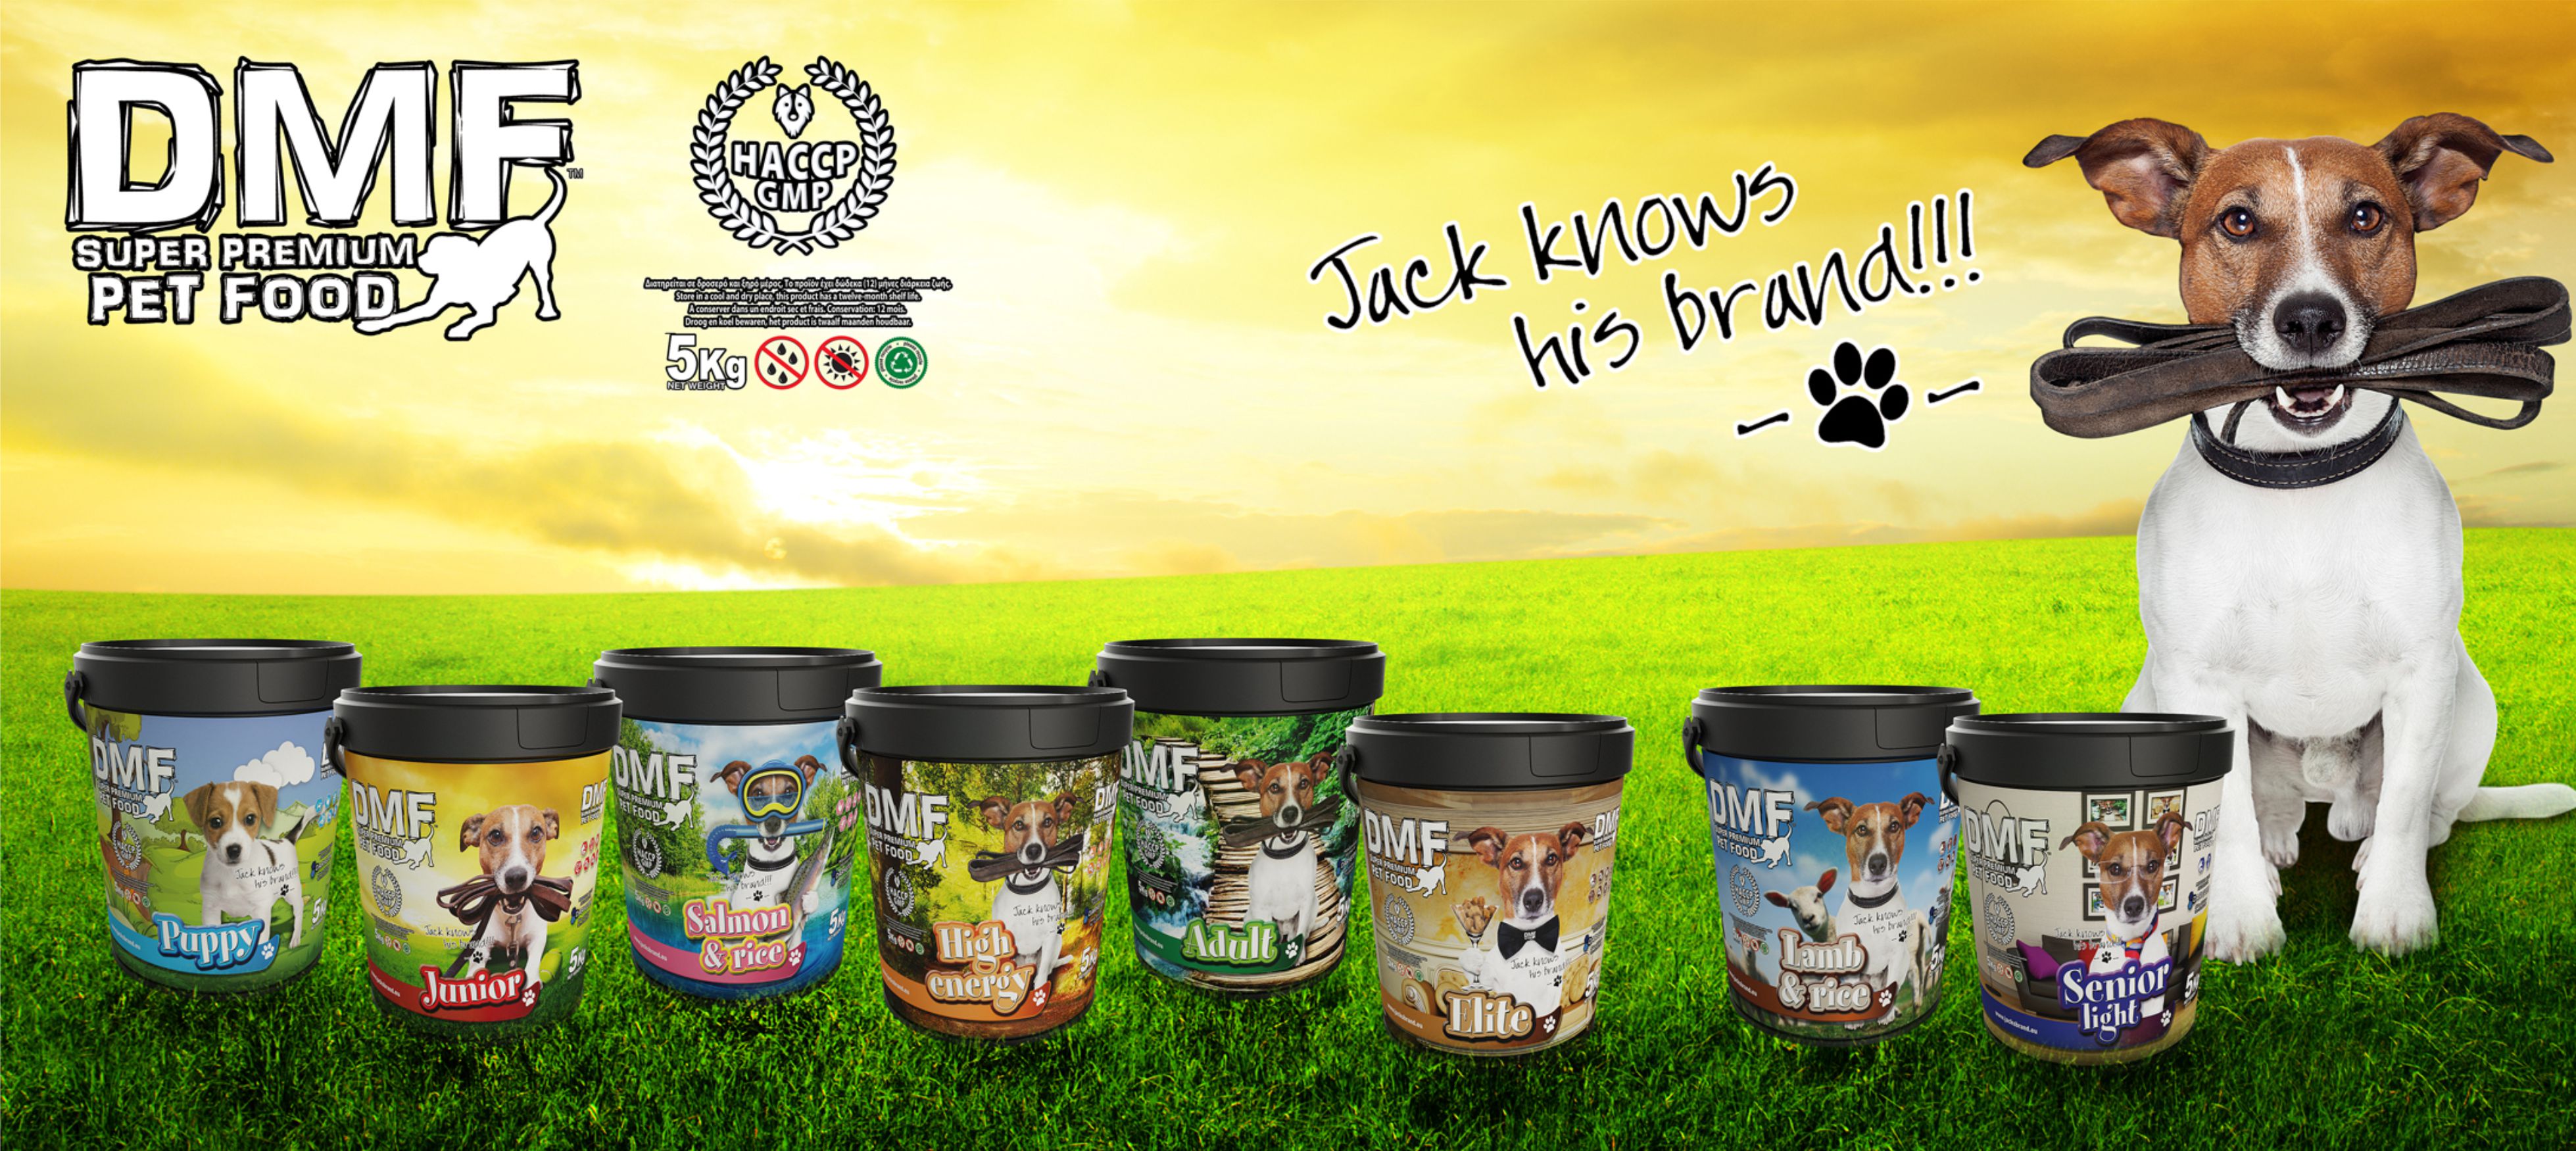 DMF Puppy Jacks Brand